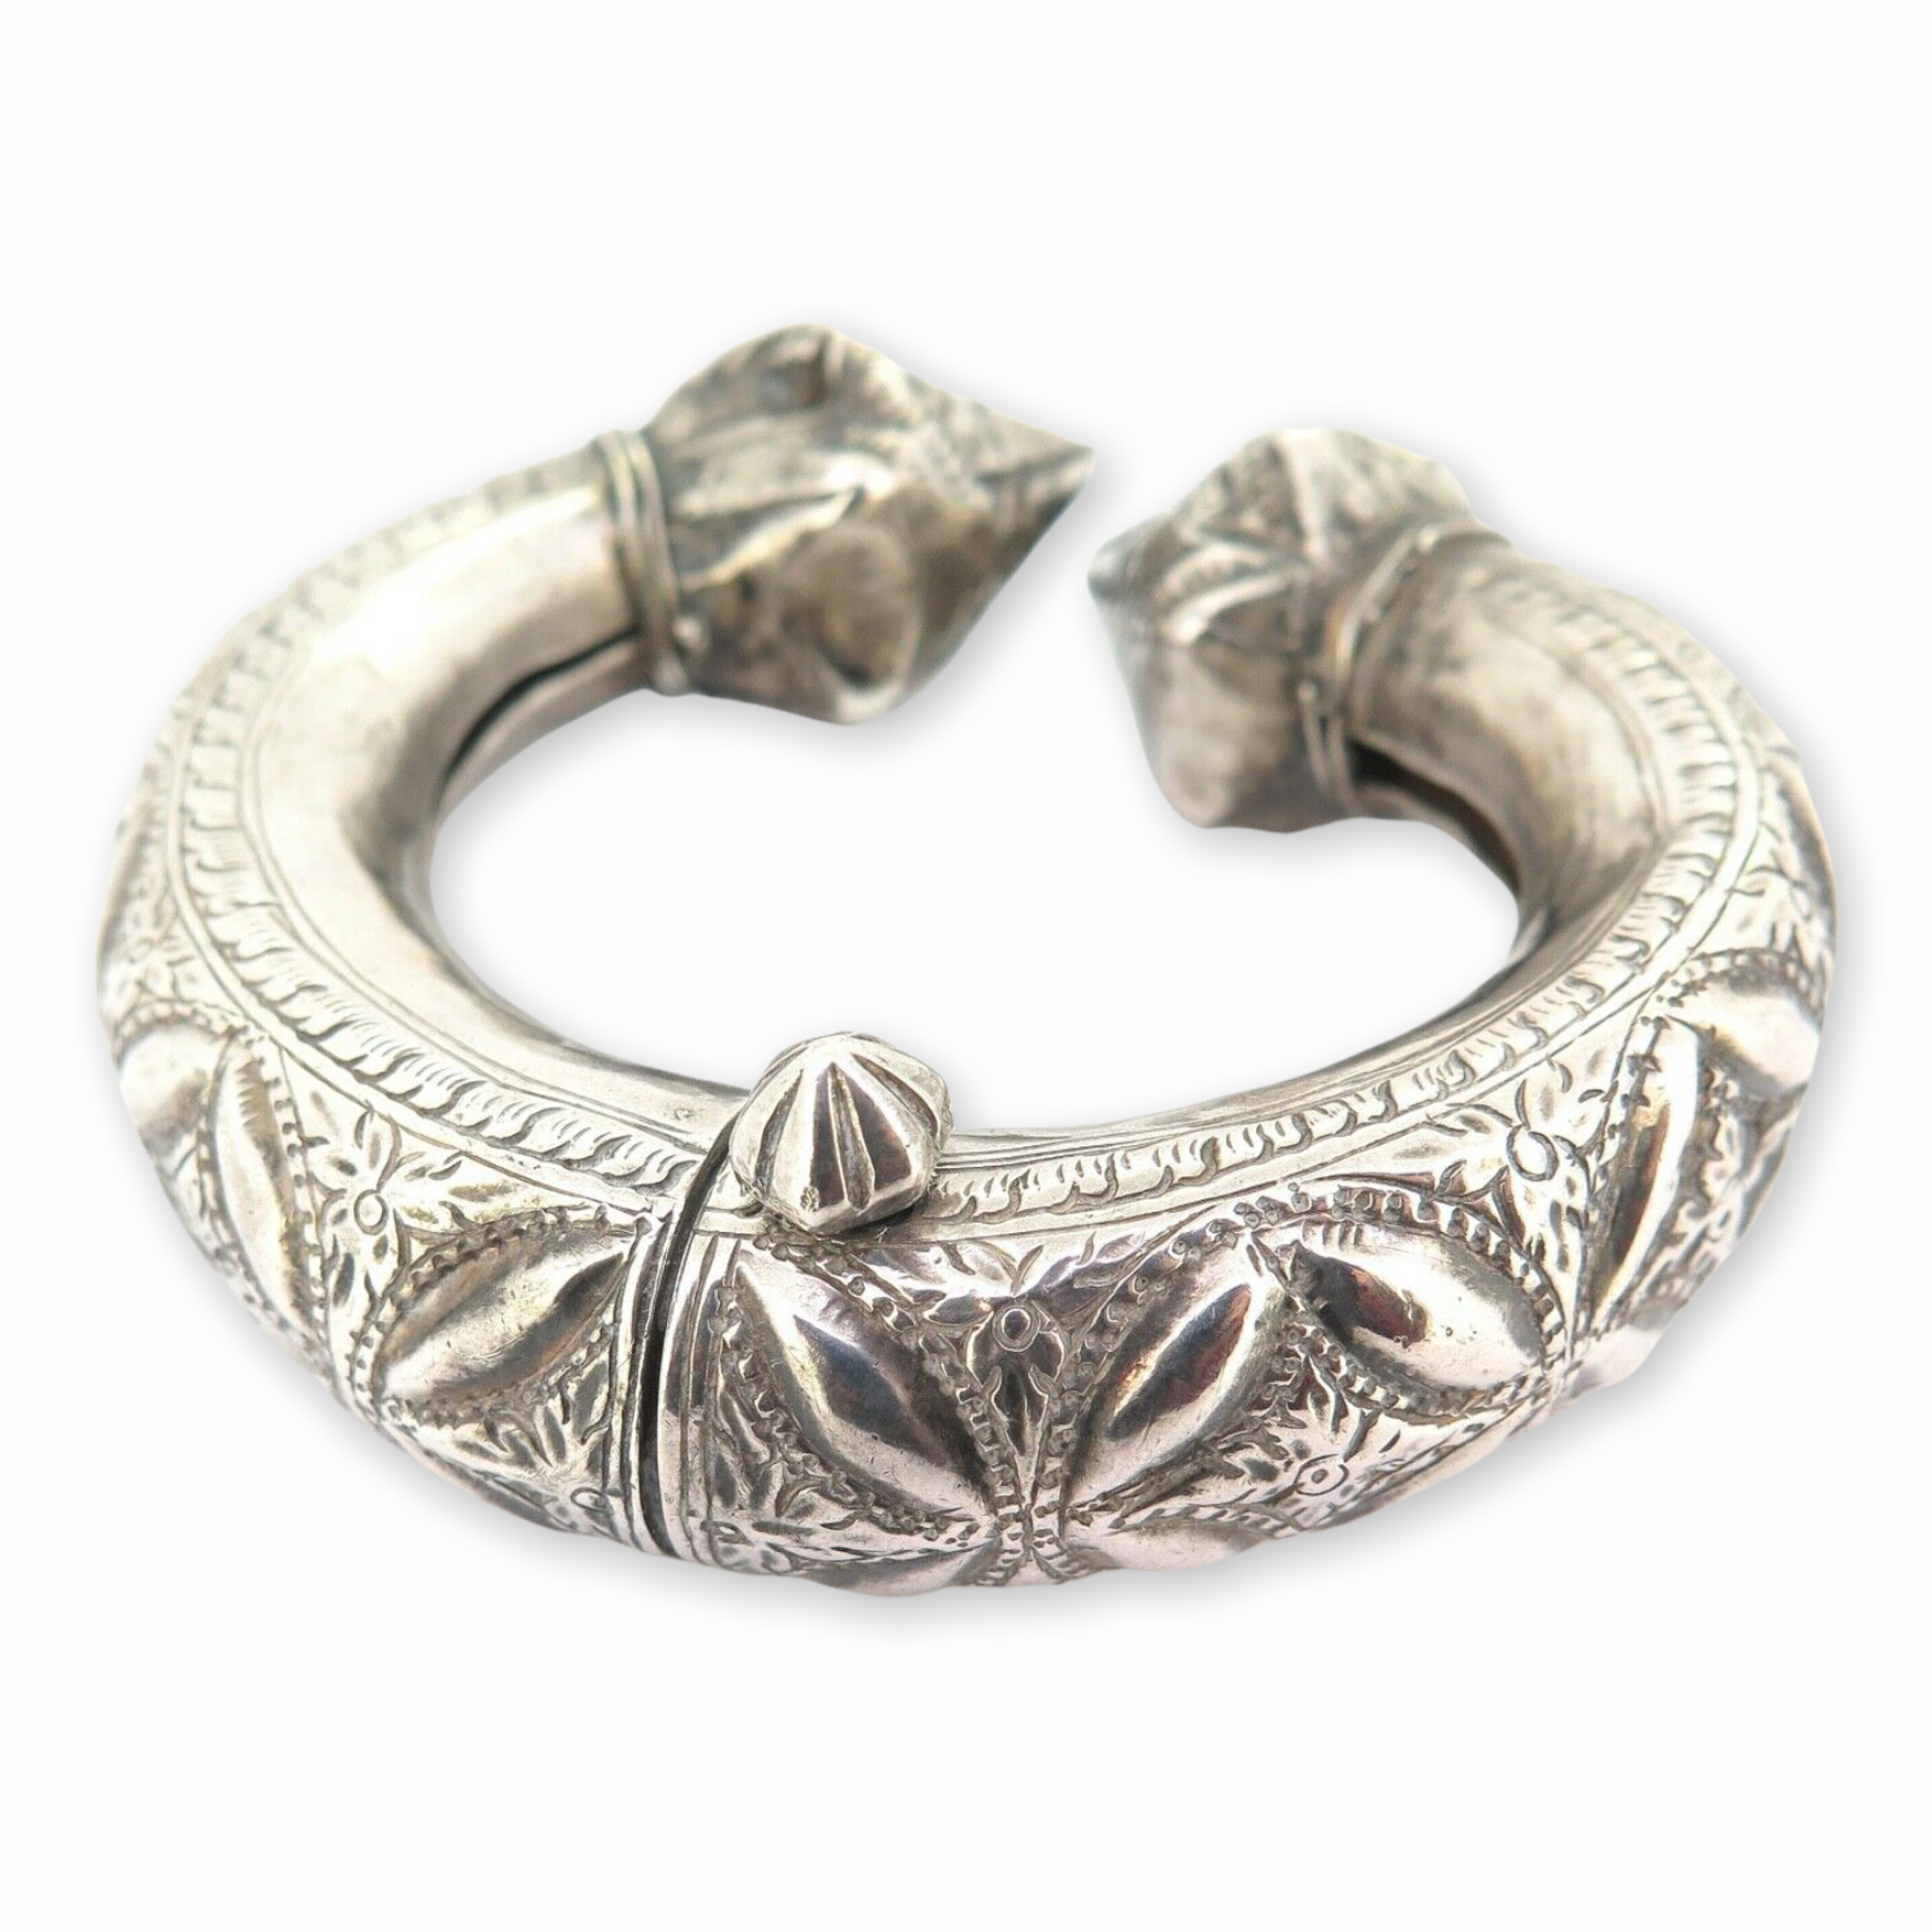 Eternity Ring Slave Bracelet - Serenity in Chains